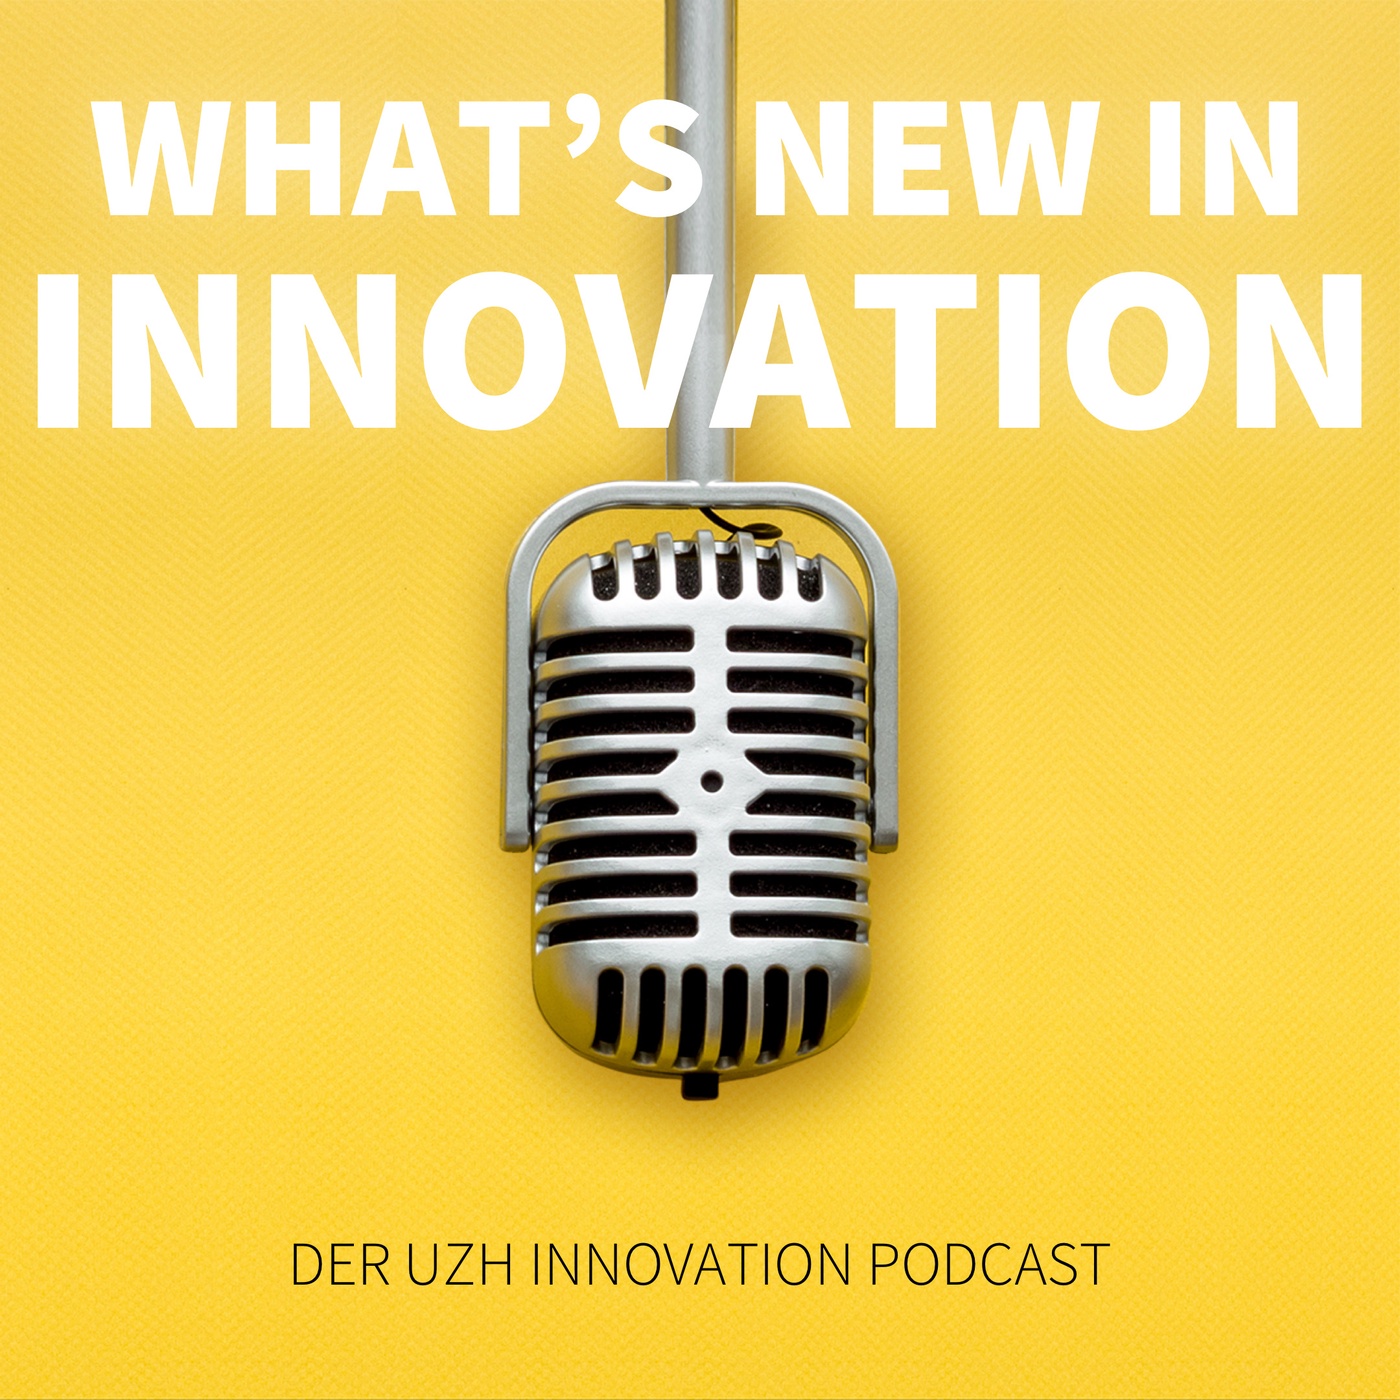 UZH Innovation Podcast